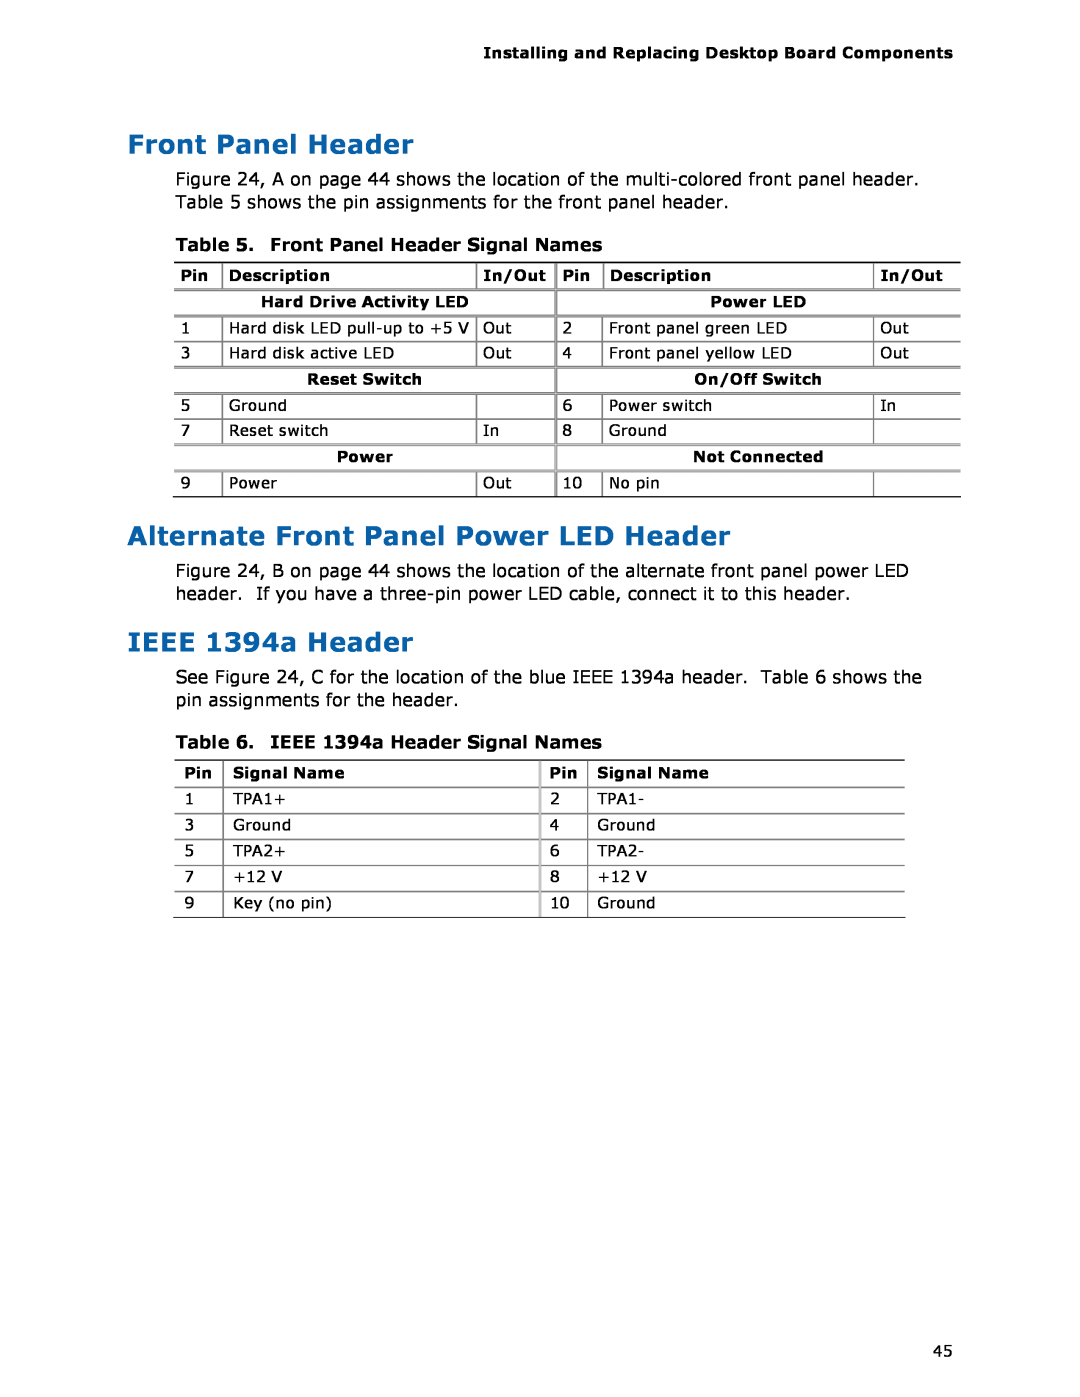 Intel D975XBX2 manual Front Panel Header, Alternate Front Panel Power LED Header, IEEE 1394a Header 